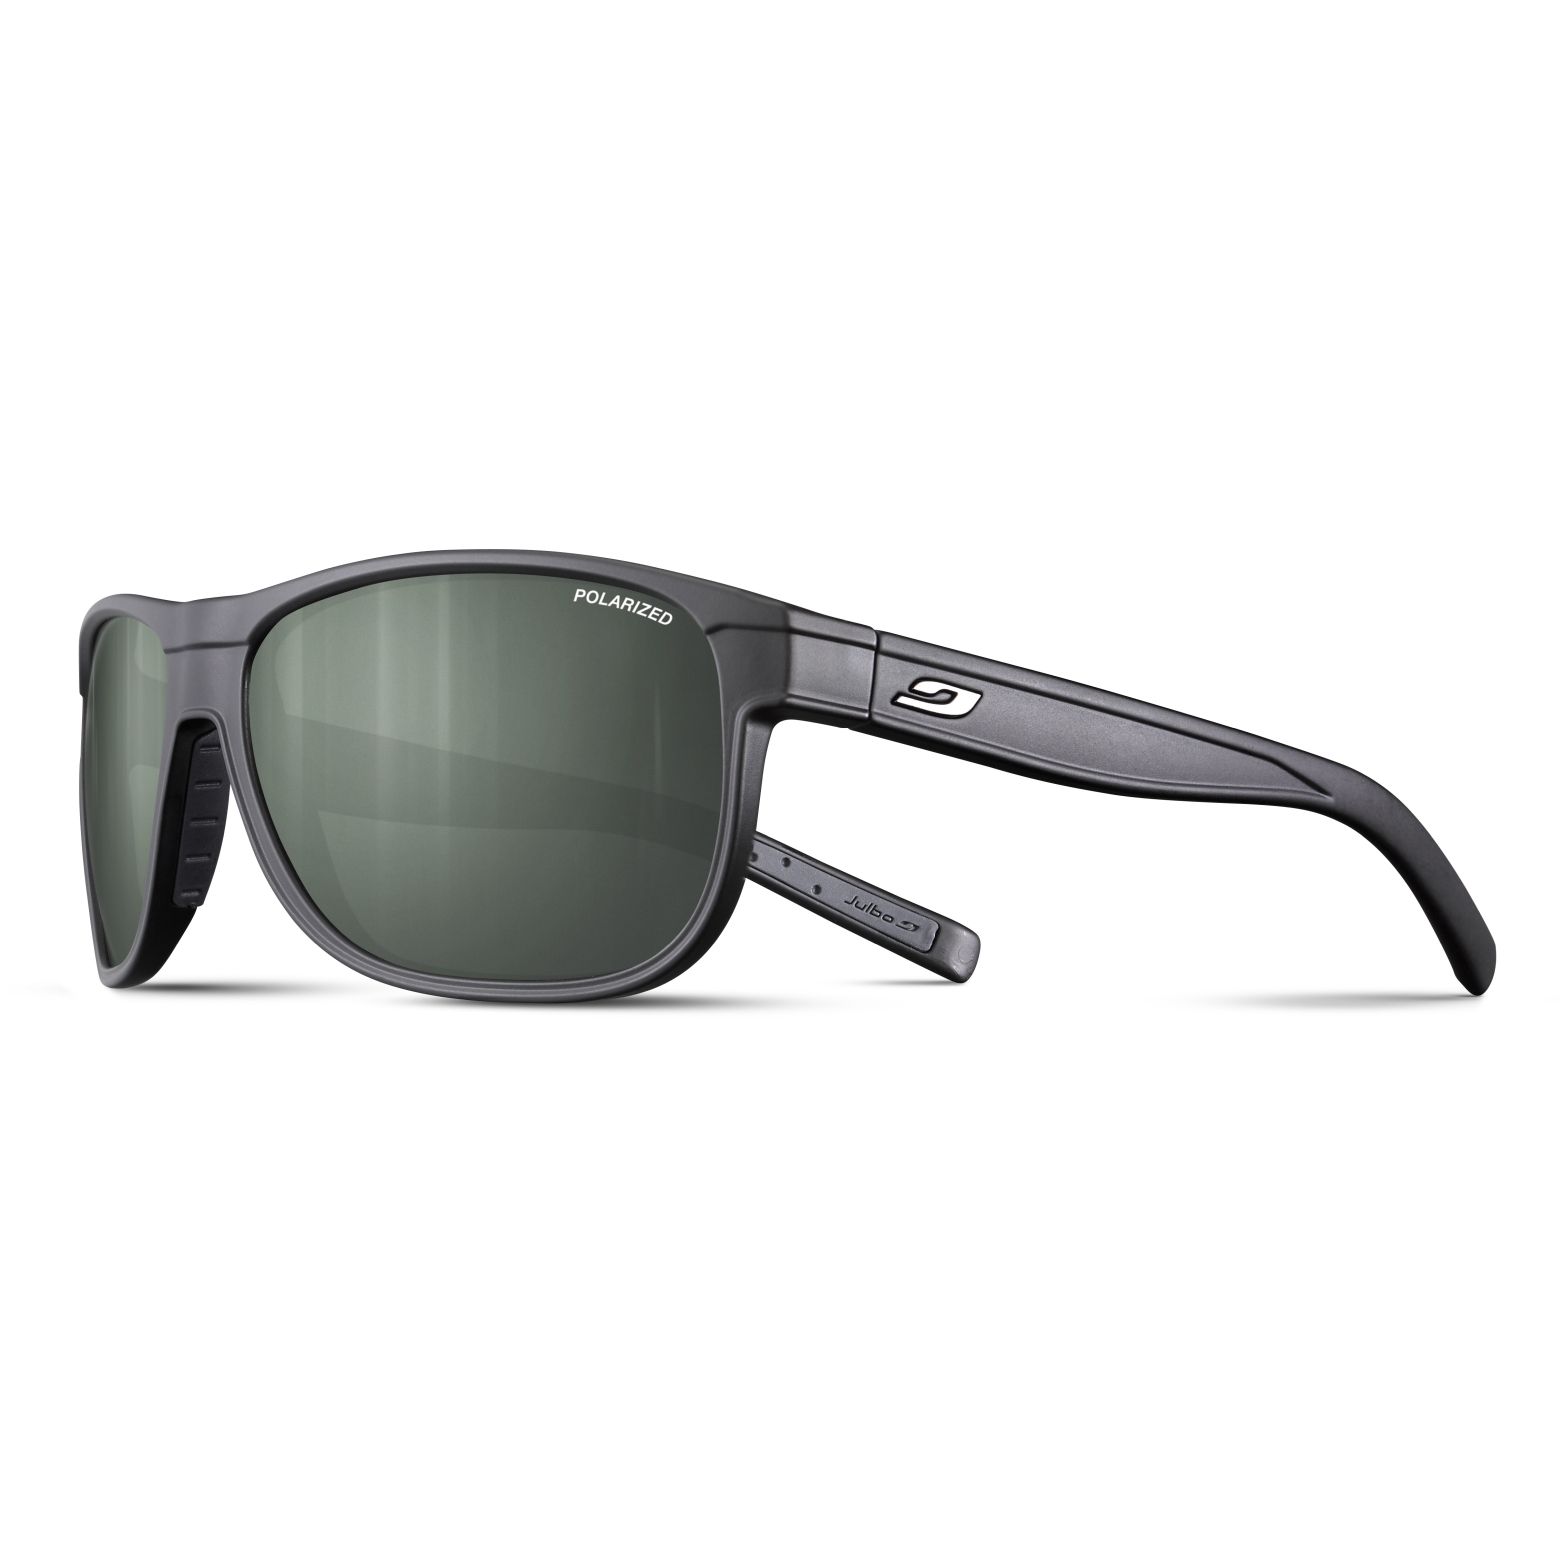 Productfoto van Julbo Renegade M Spectron 3 Polarized Sunglasses - Black